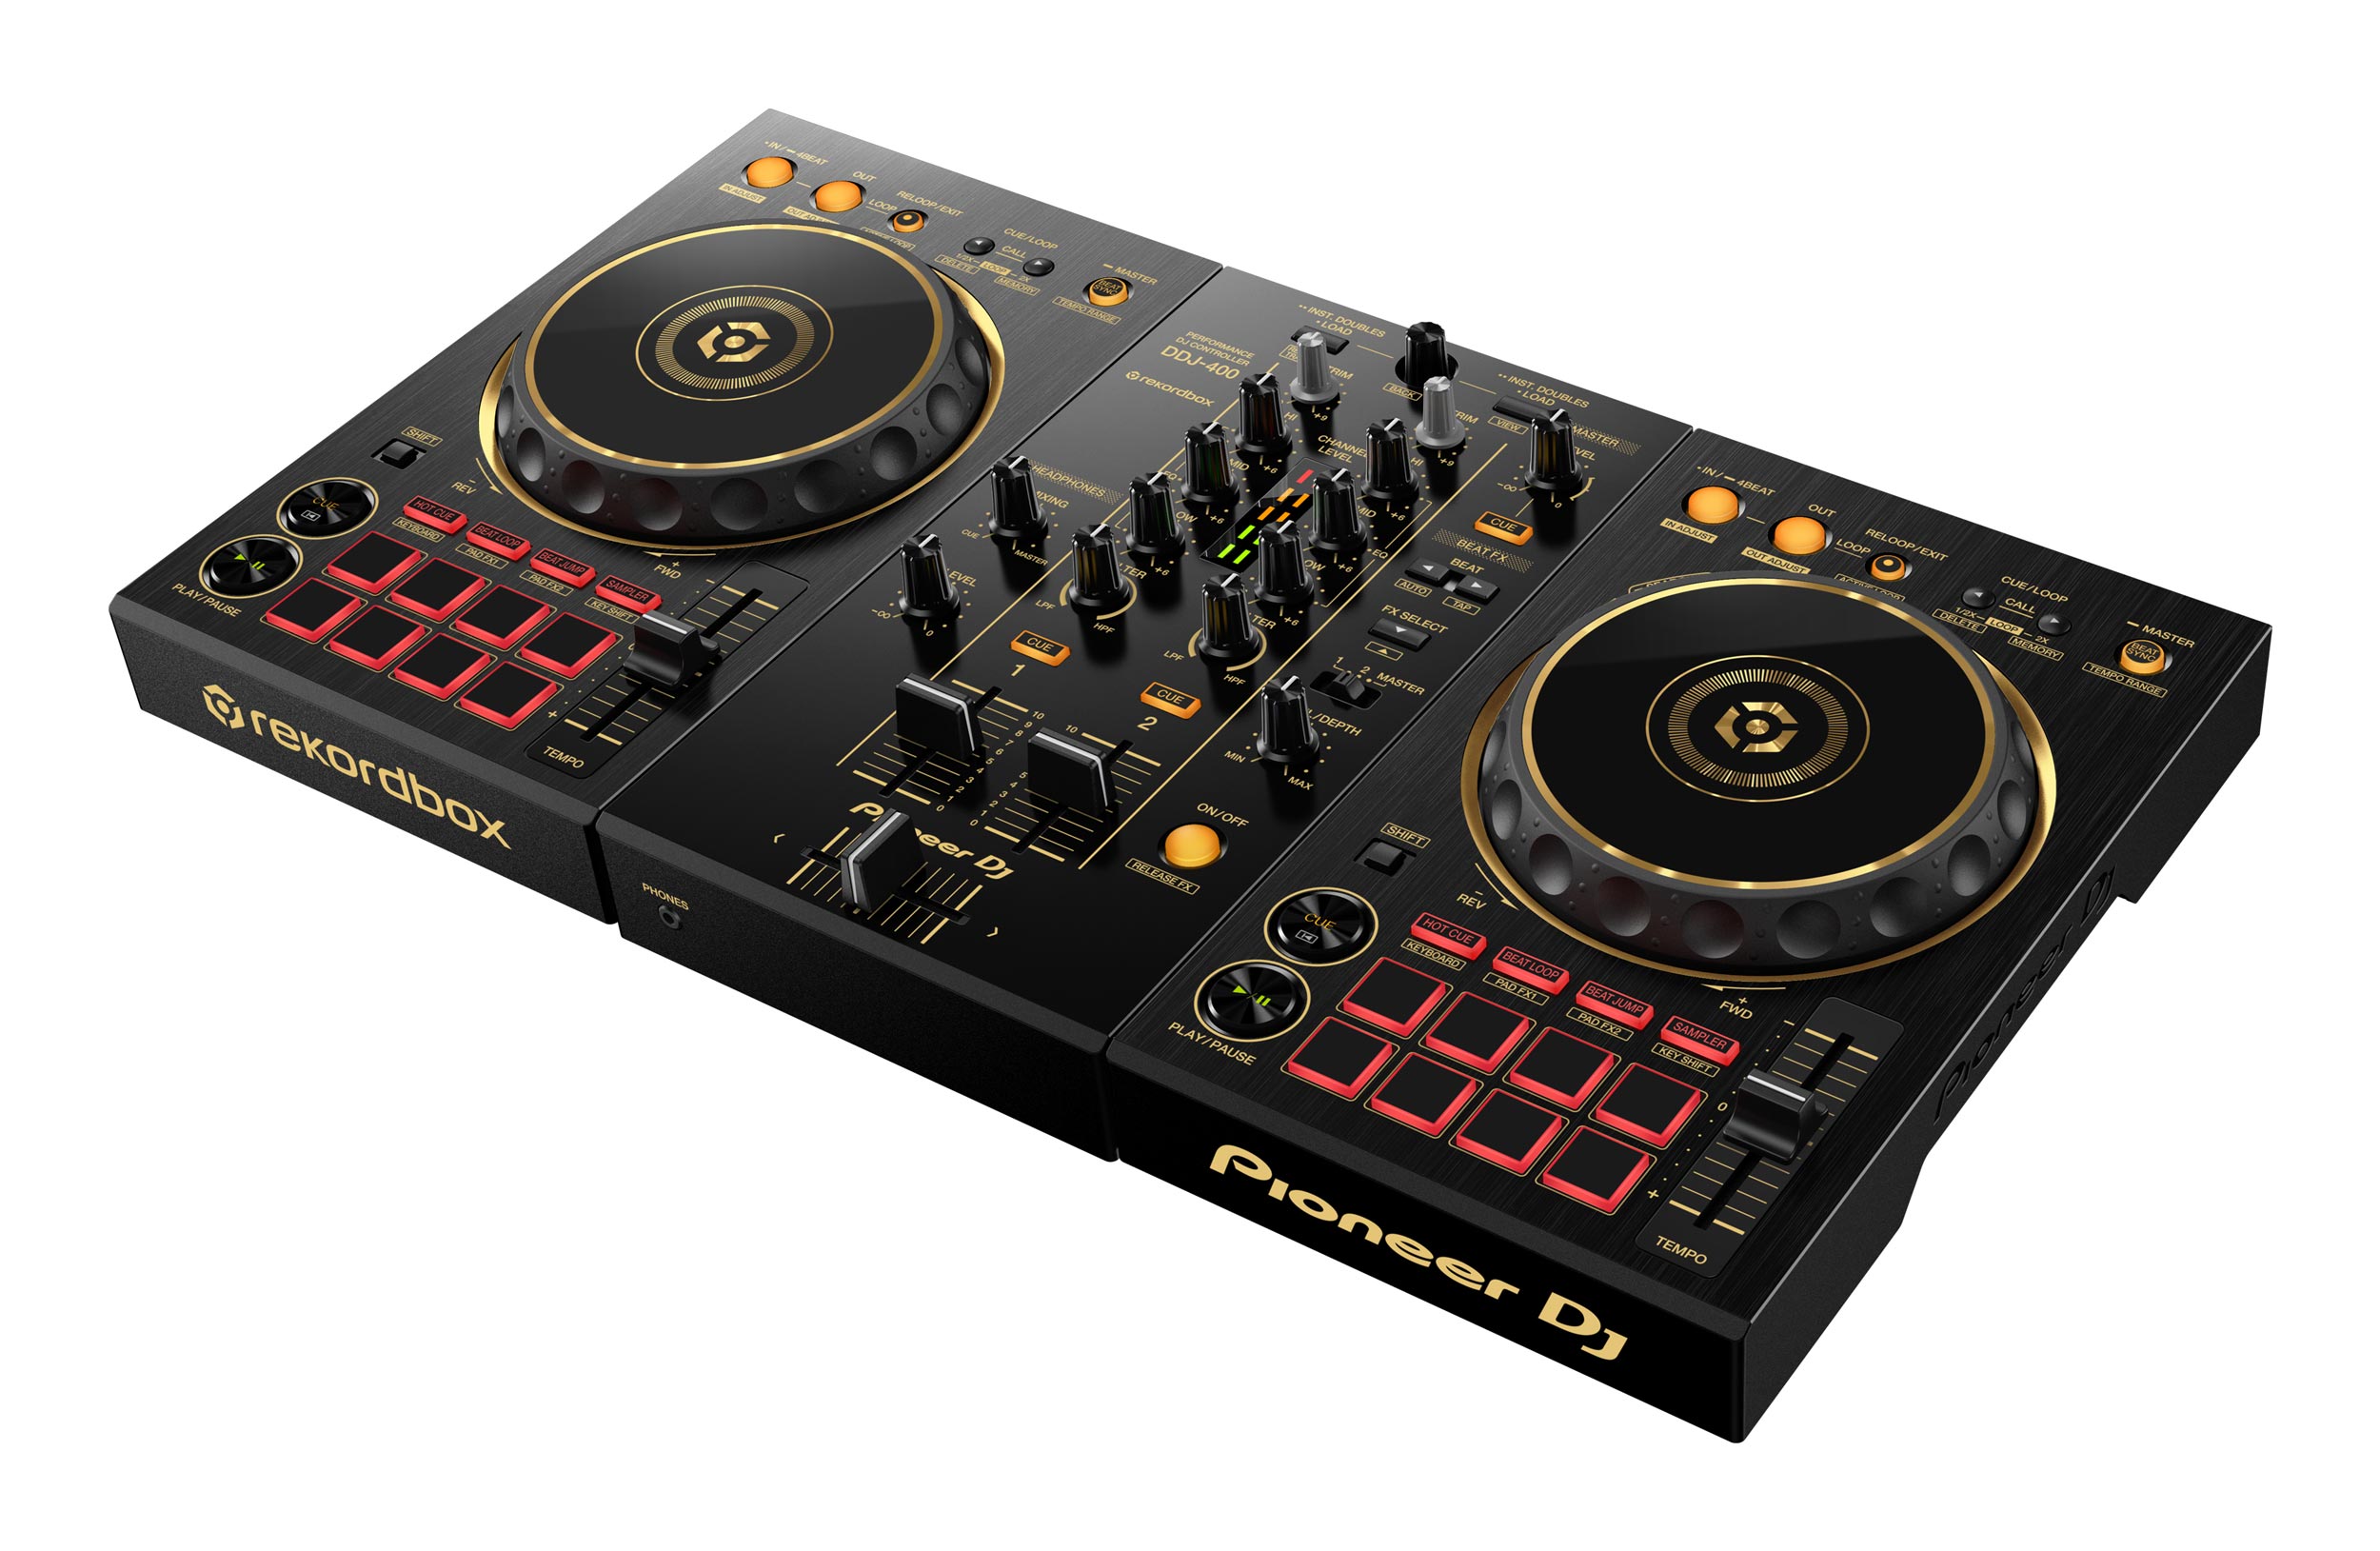 PIONEER DJ DDJ-400-N rekordbox DJ Controller Gold Colorway | agiprodj